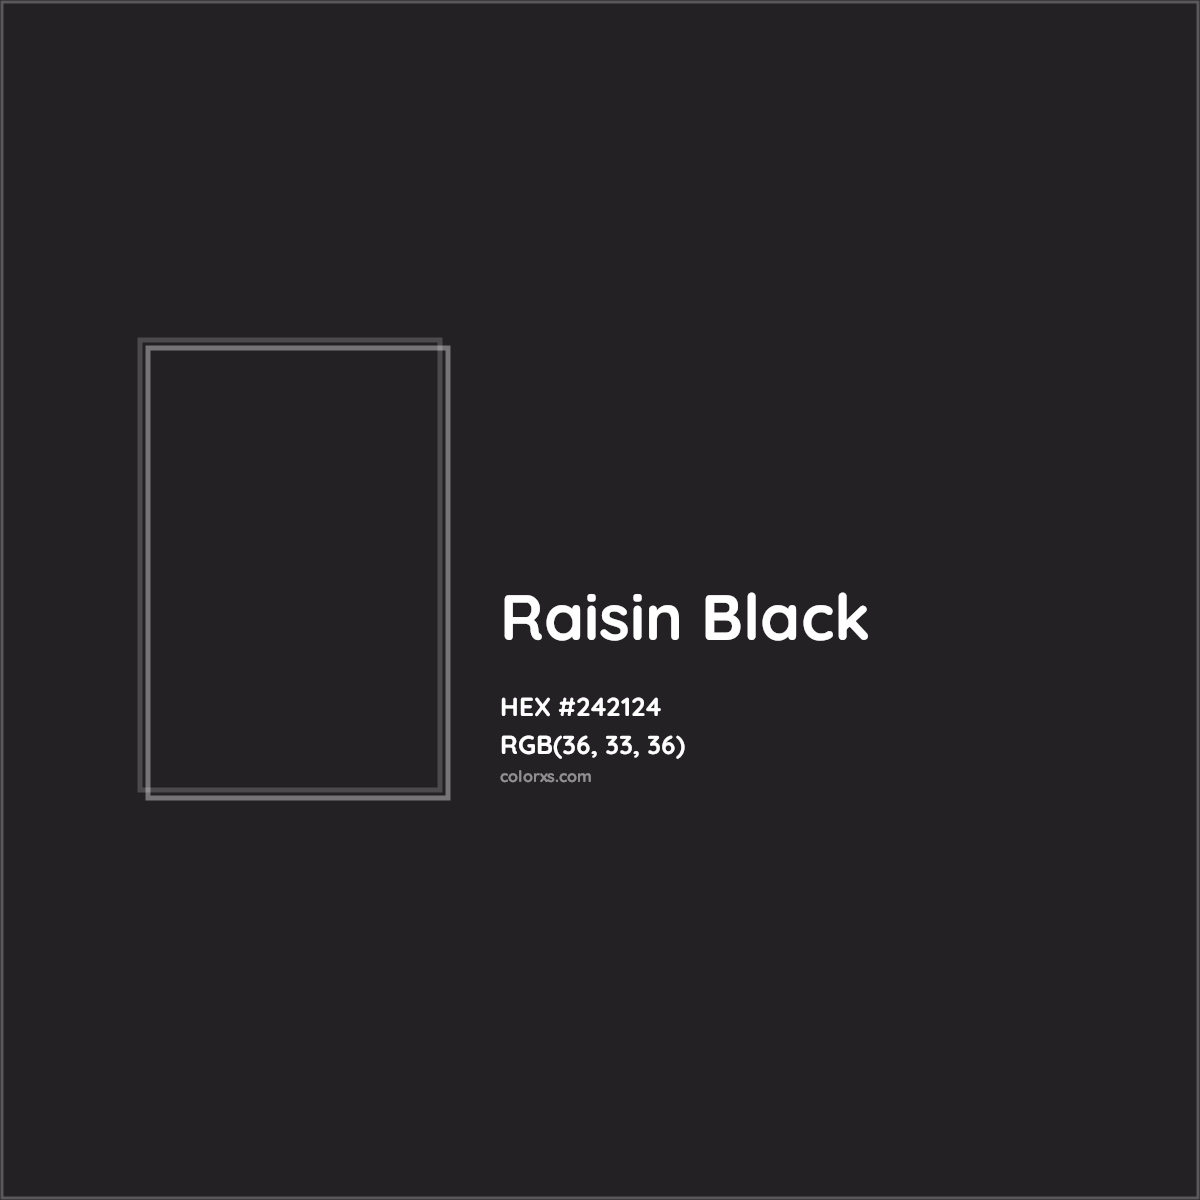 HEX #242124 Raisin Black Color - Color Code